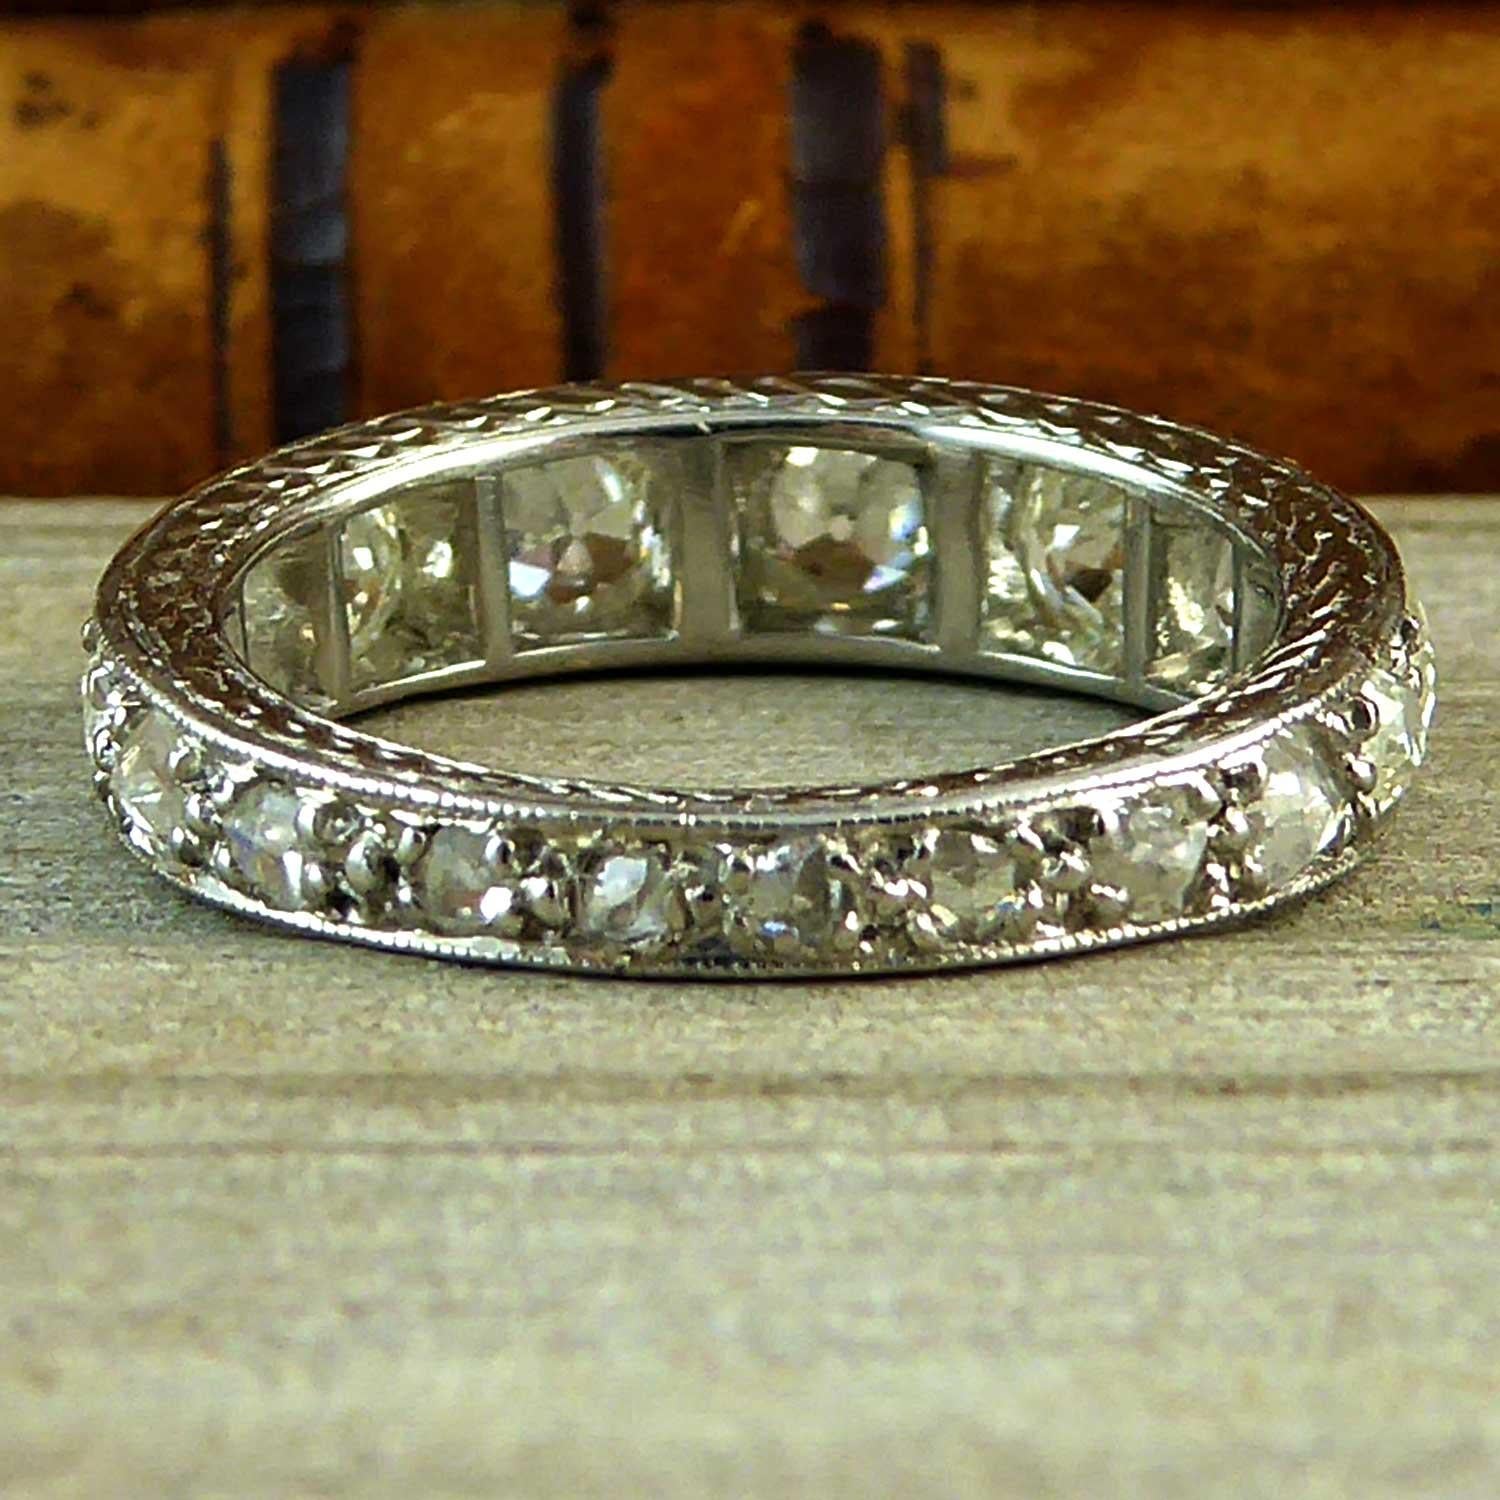 Women's or Men's Vintage 1.85 Carat Diamond Eternity Ring, circa 1930s-1940s, Platinum